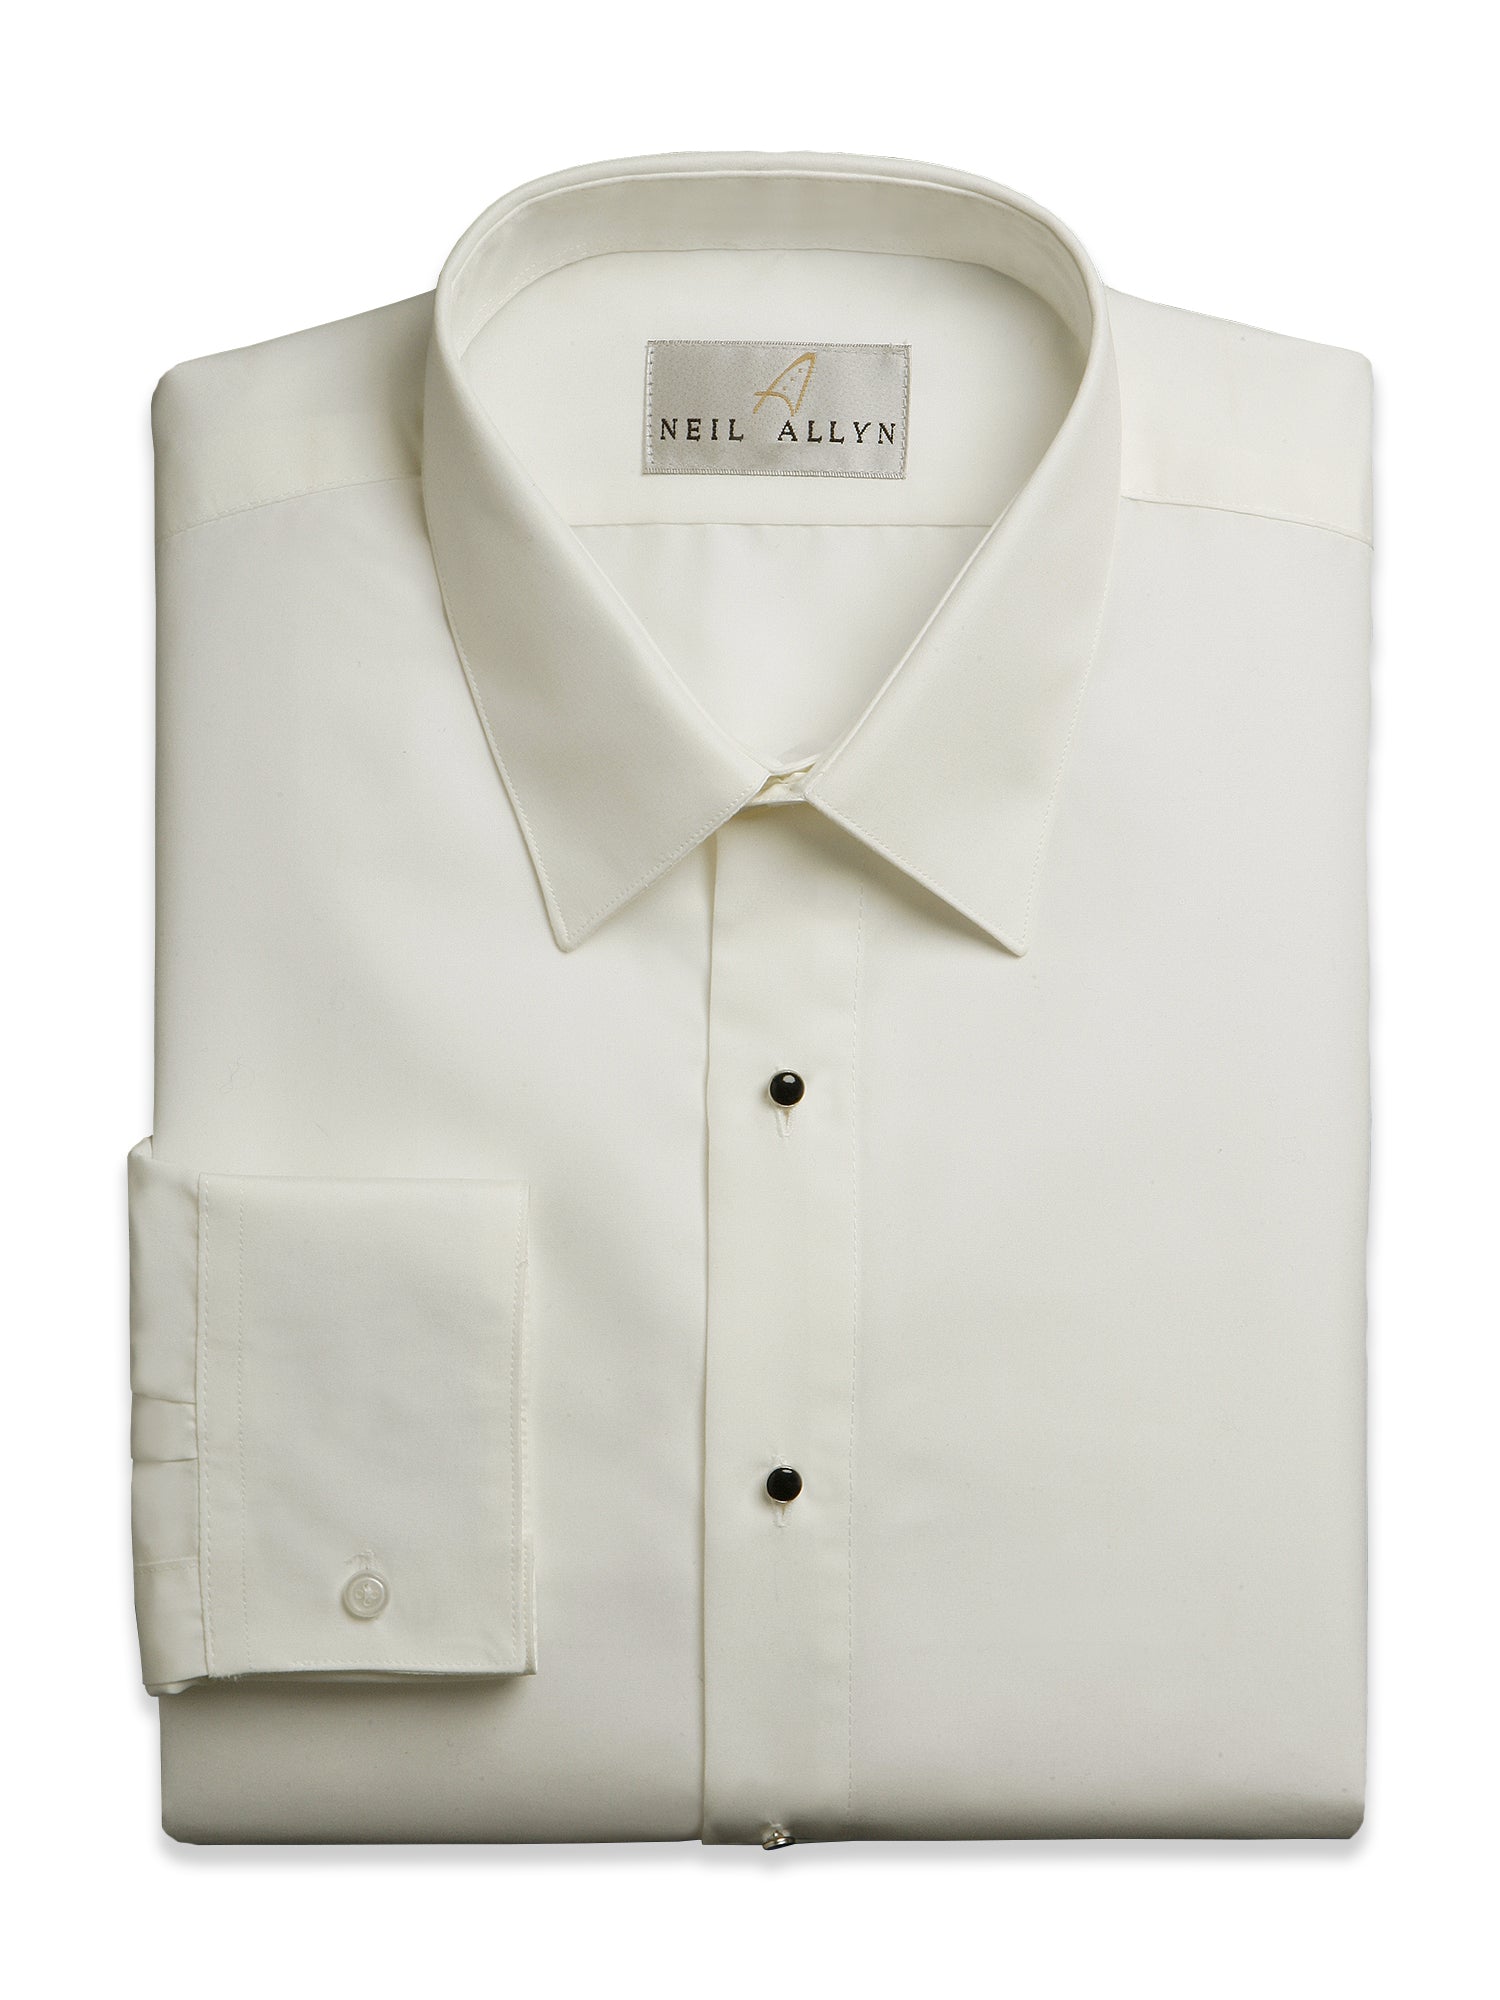 Neil Allyn Laydown Collar Men's Dress Shirts in Ivory - Tall Man Sizes